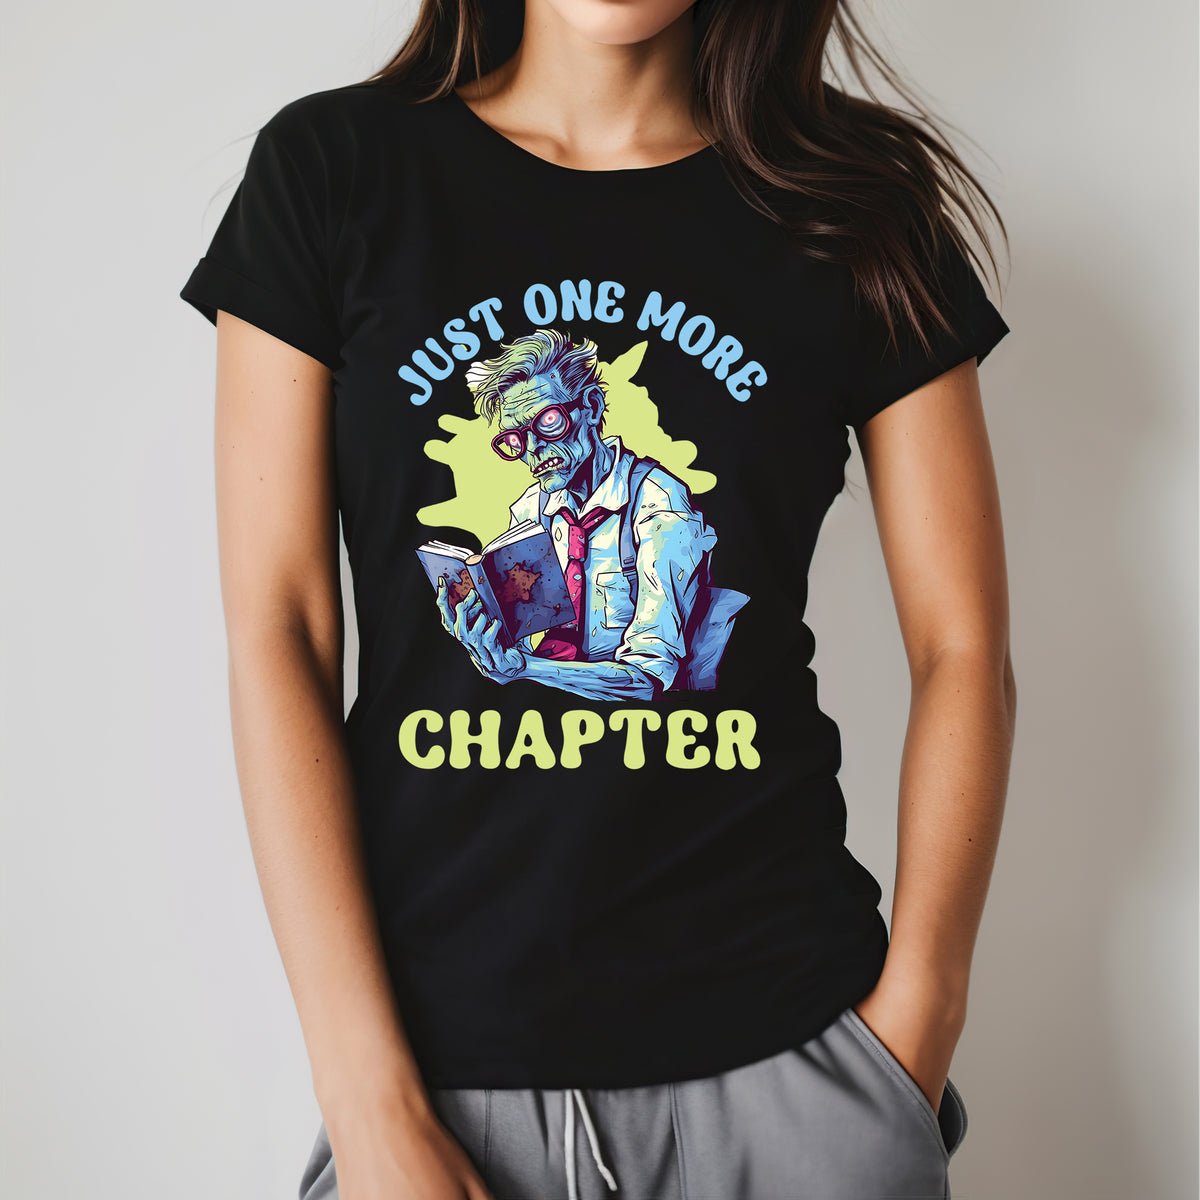 Just One More Chapter Zombie Shirt | Halloween Book Shirt  | Women's Black Slim-fit T-shirt